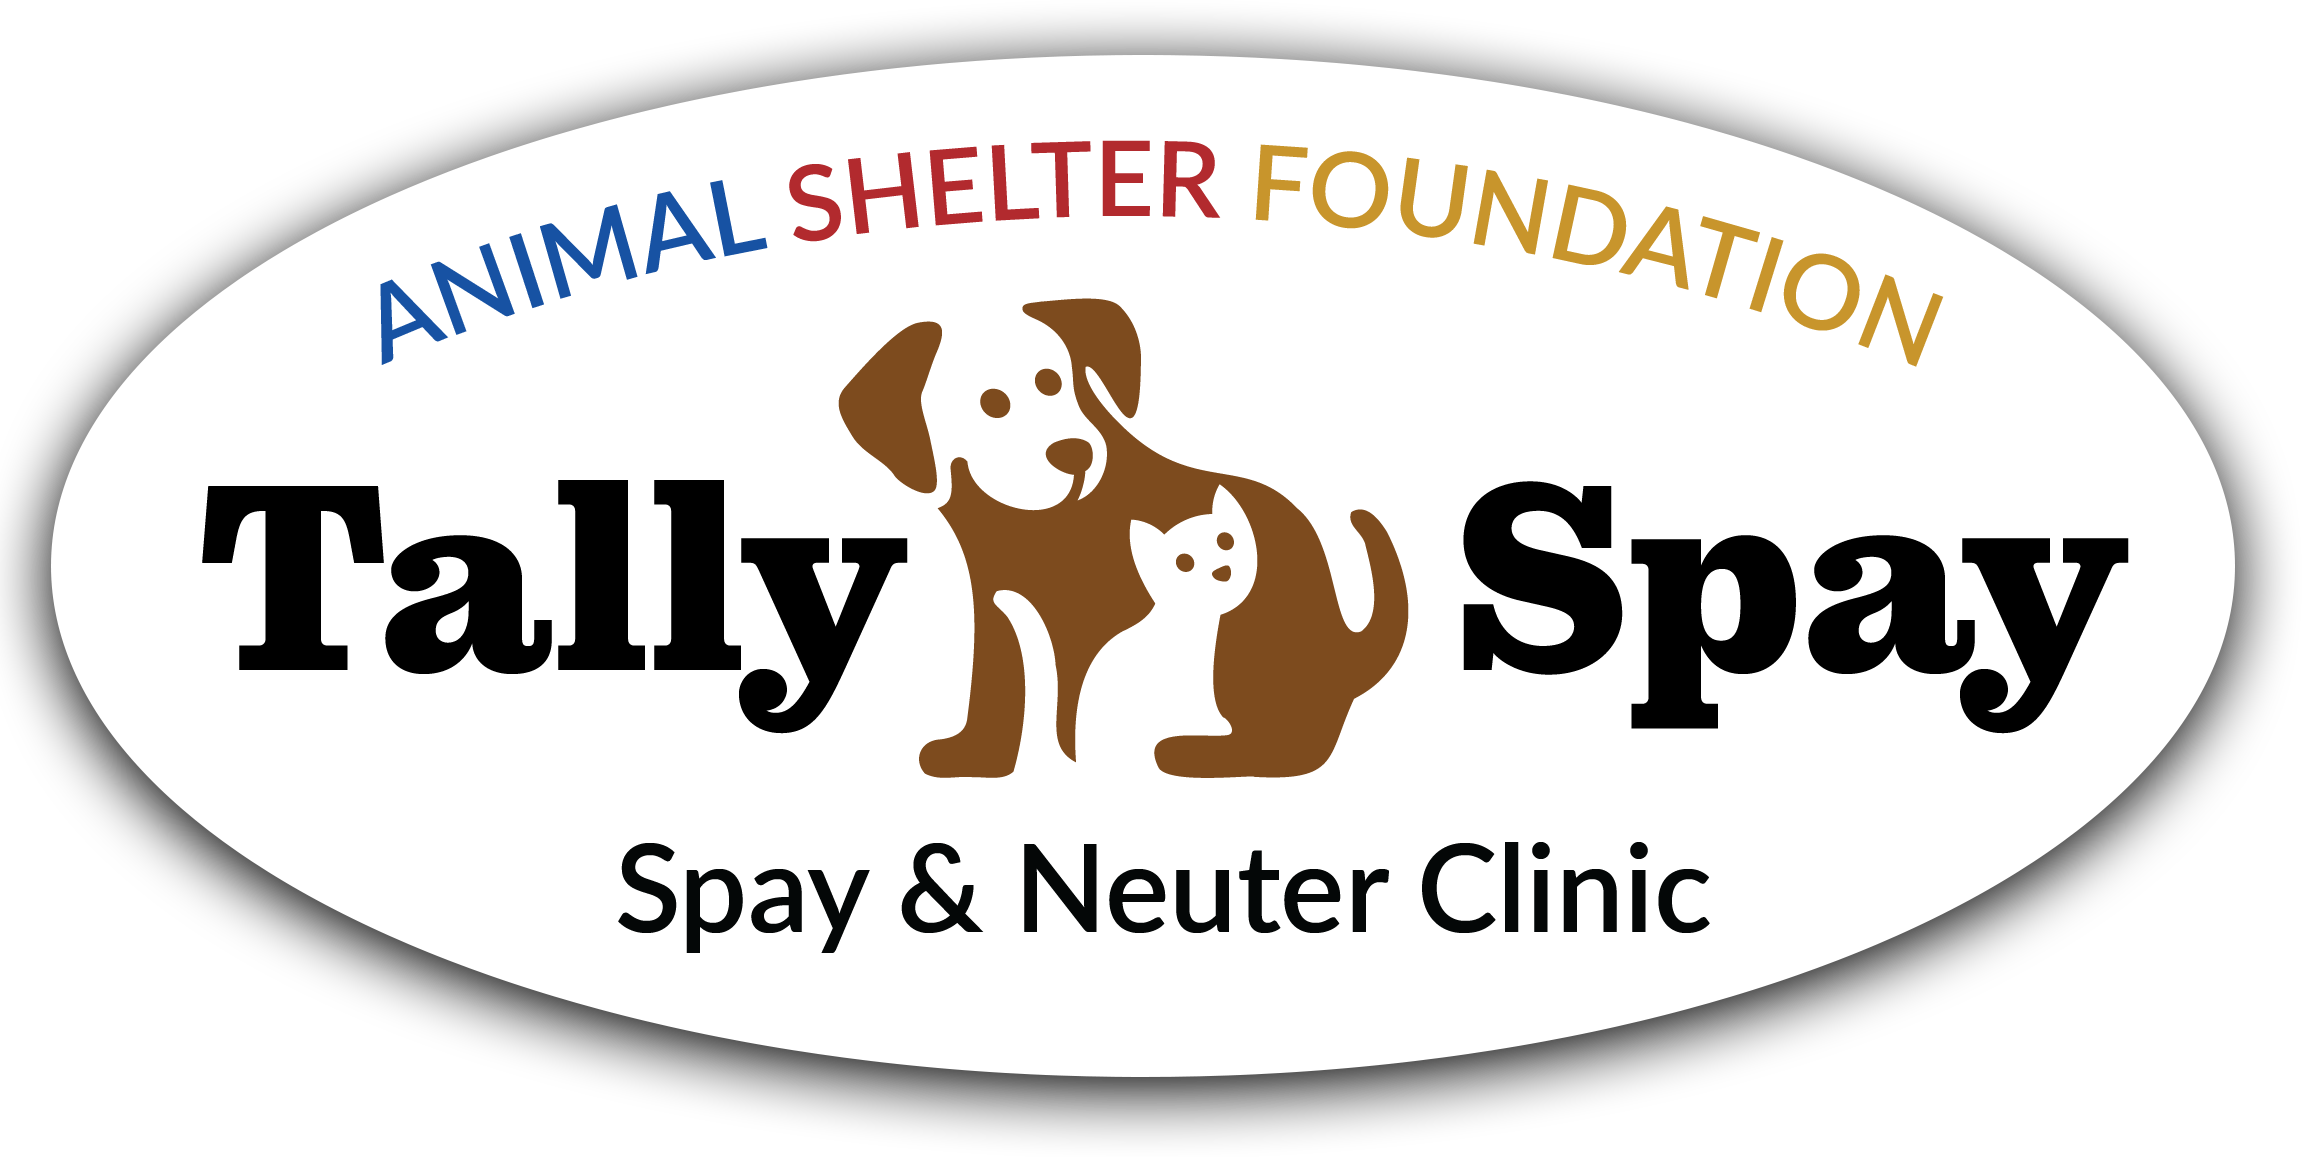 Tally Spay - Spay & Neuter Clinic | Tallahassee Animal Shelter Foundation